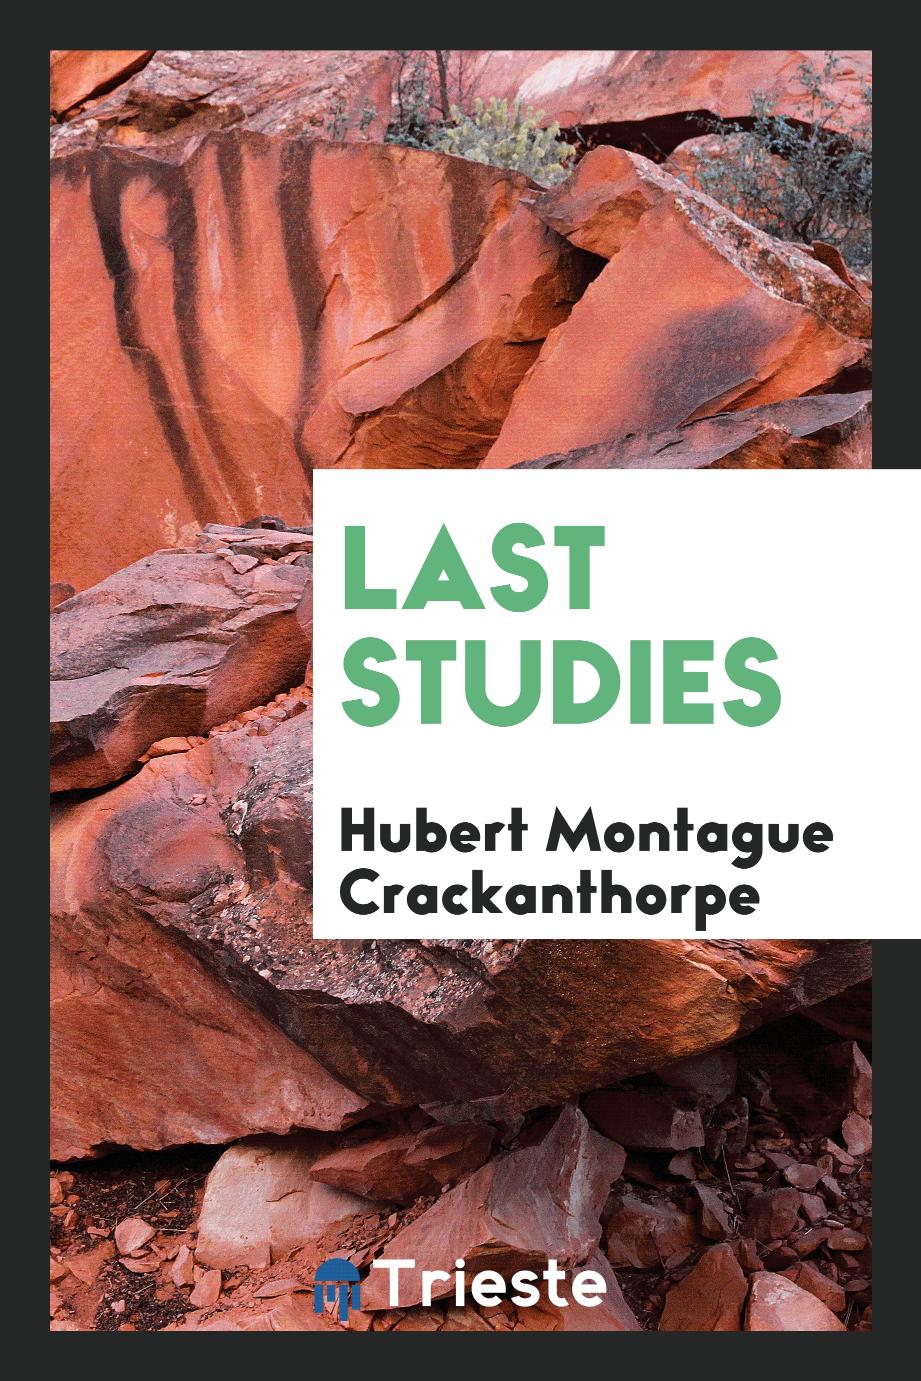 Hubert Montague Crackanthorpe - Last studies